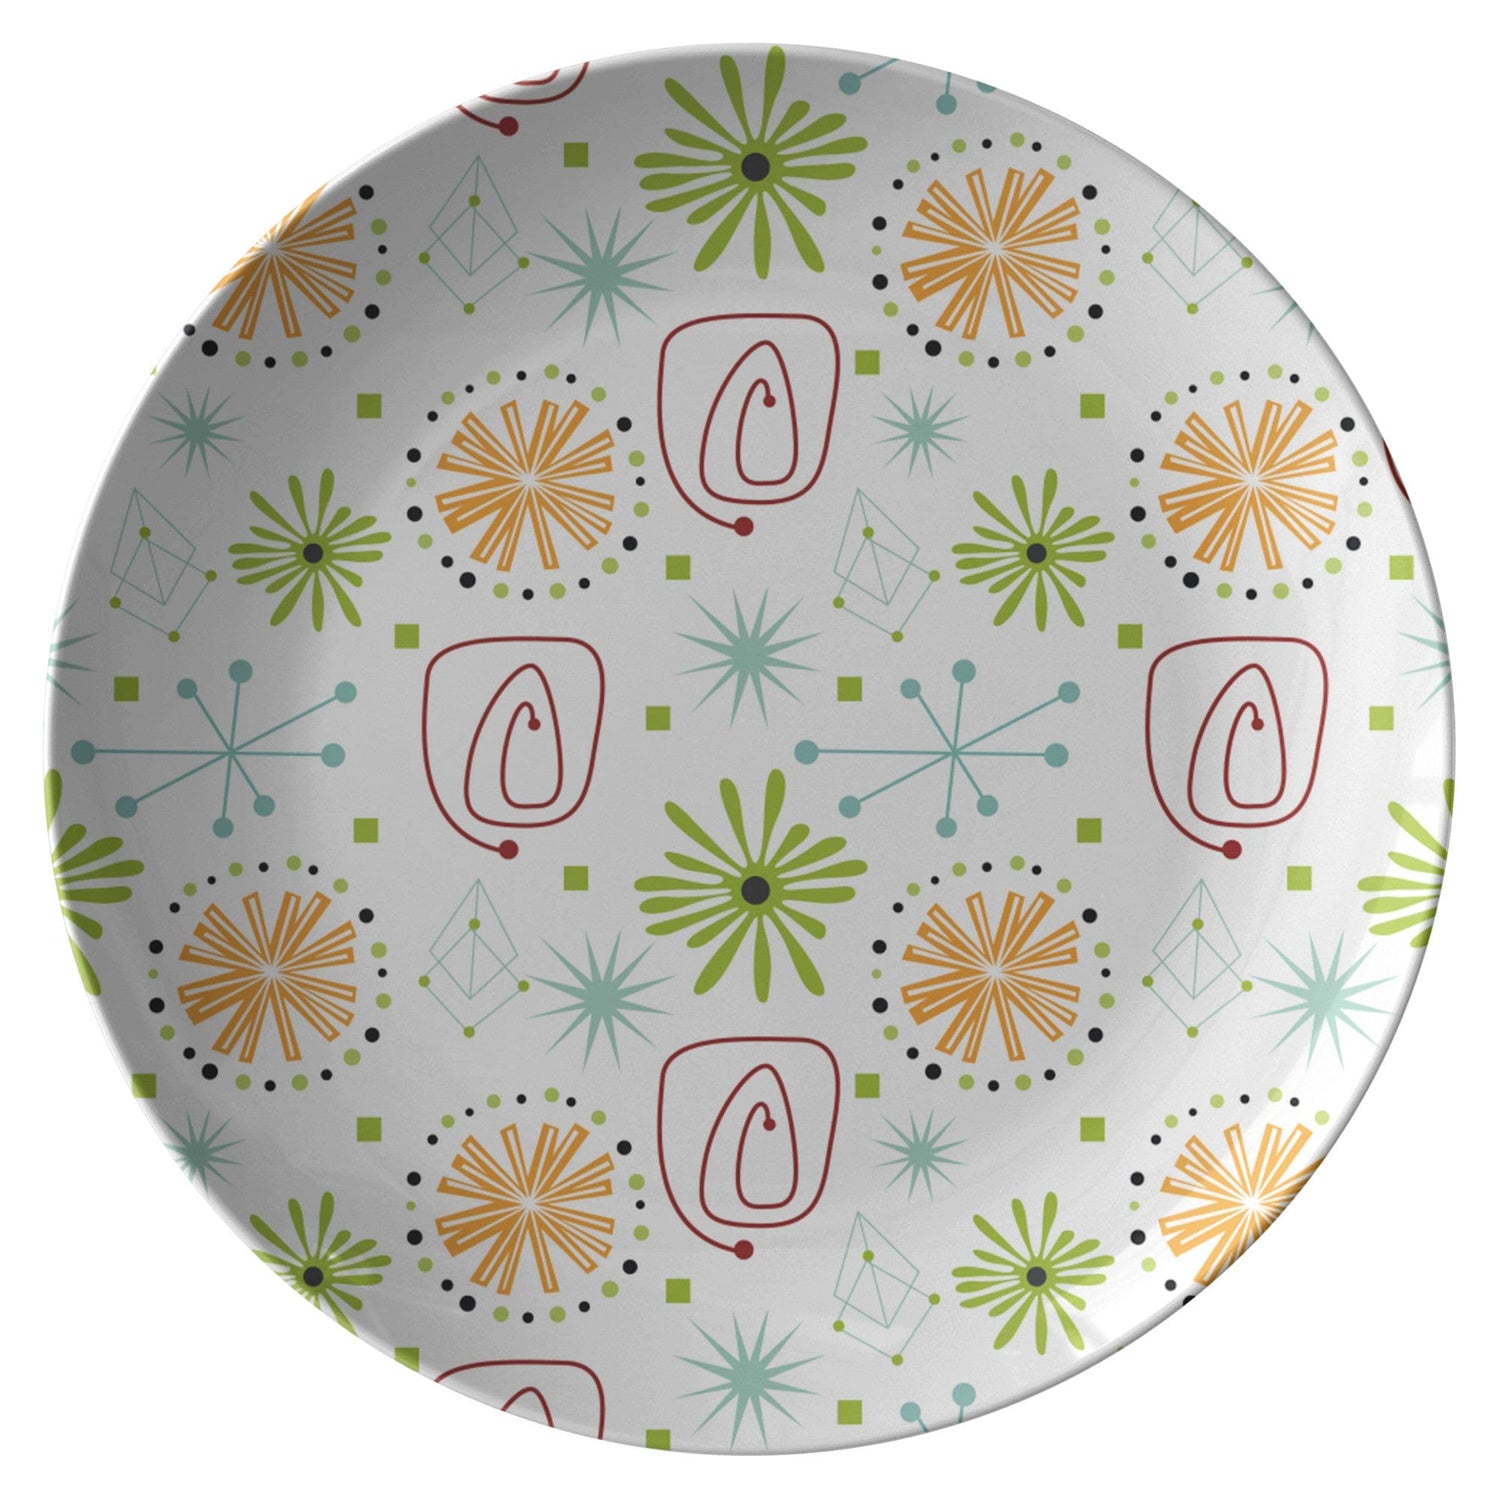 teelaunch Atomic Age Dinner Plate, Mid Century Modern Dining Decor, Retro Chic Dish Kitchenware